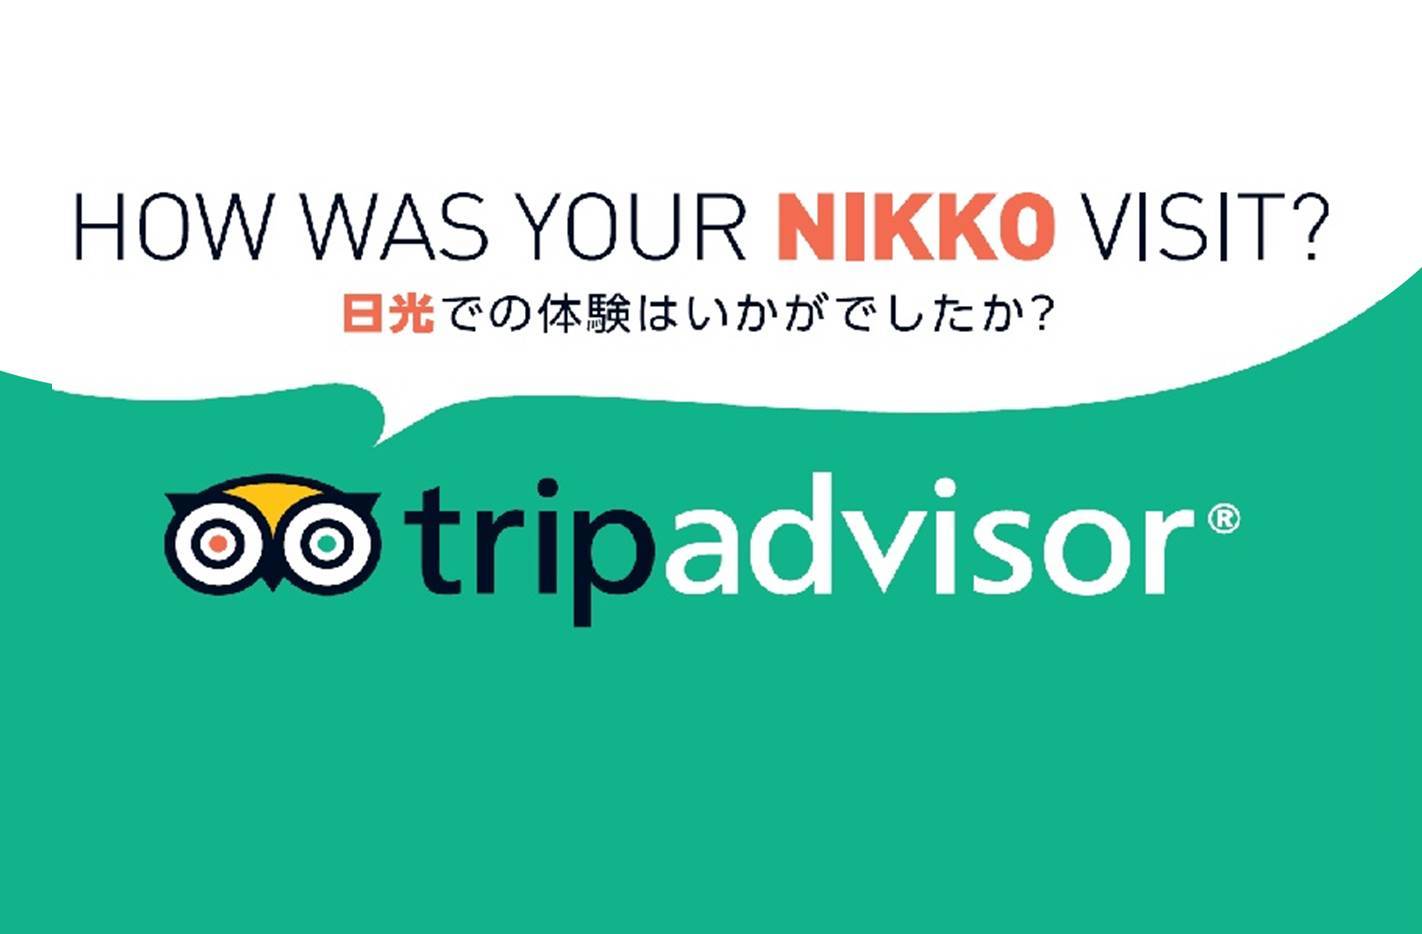 TripAdvisor에 닛코에서의 체험 후기를 쓰자! 